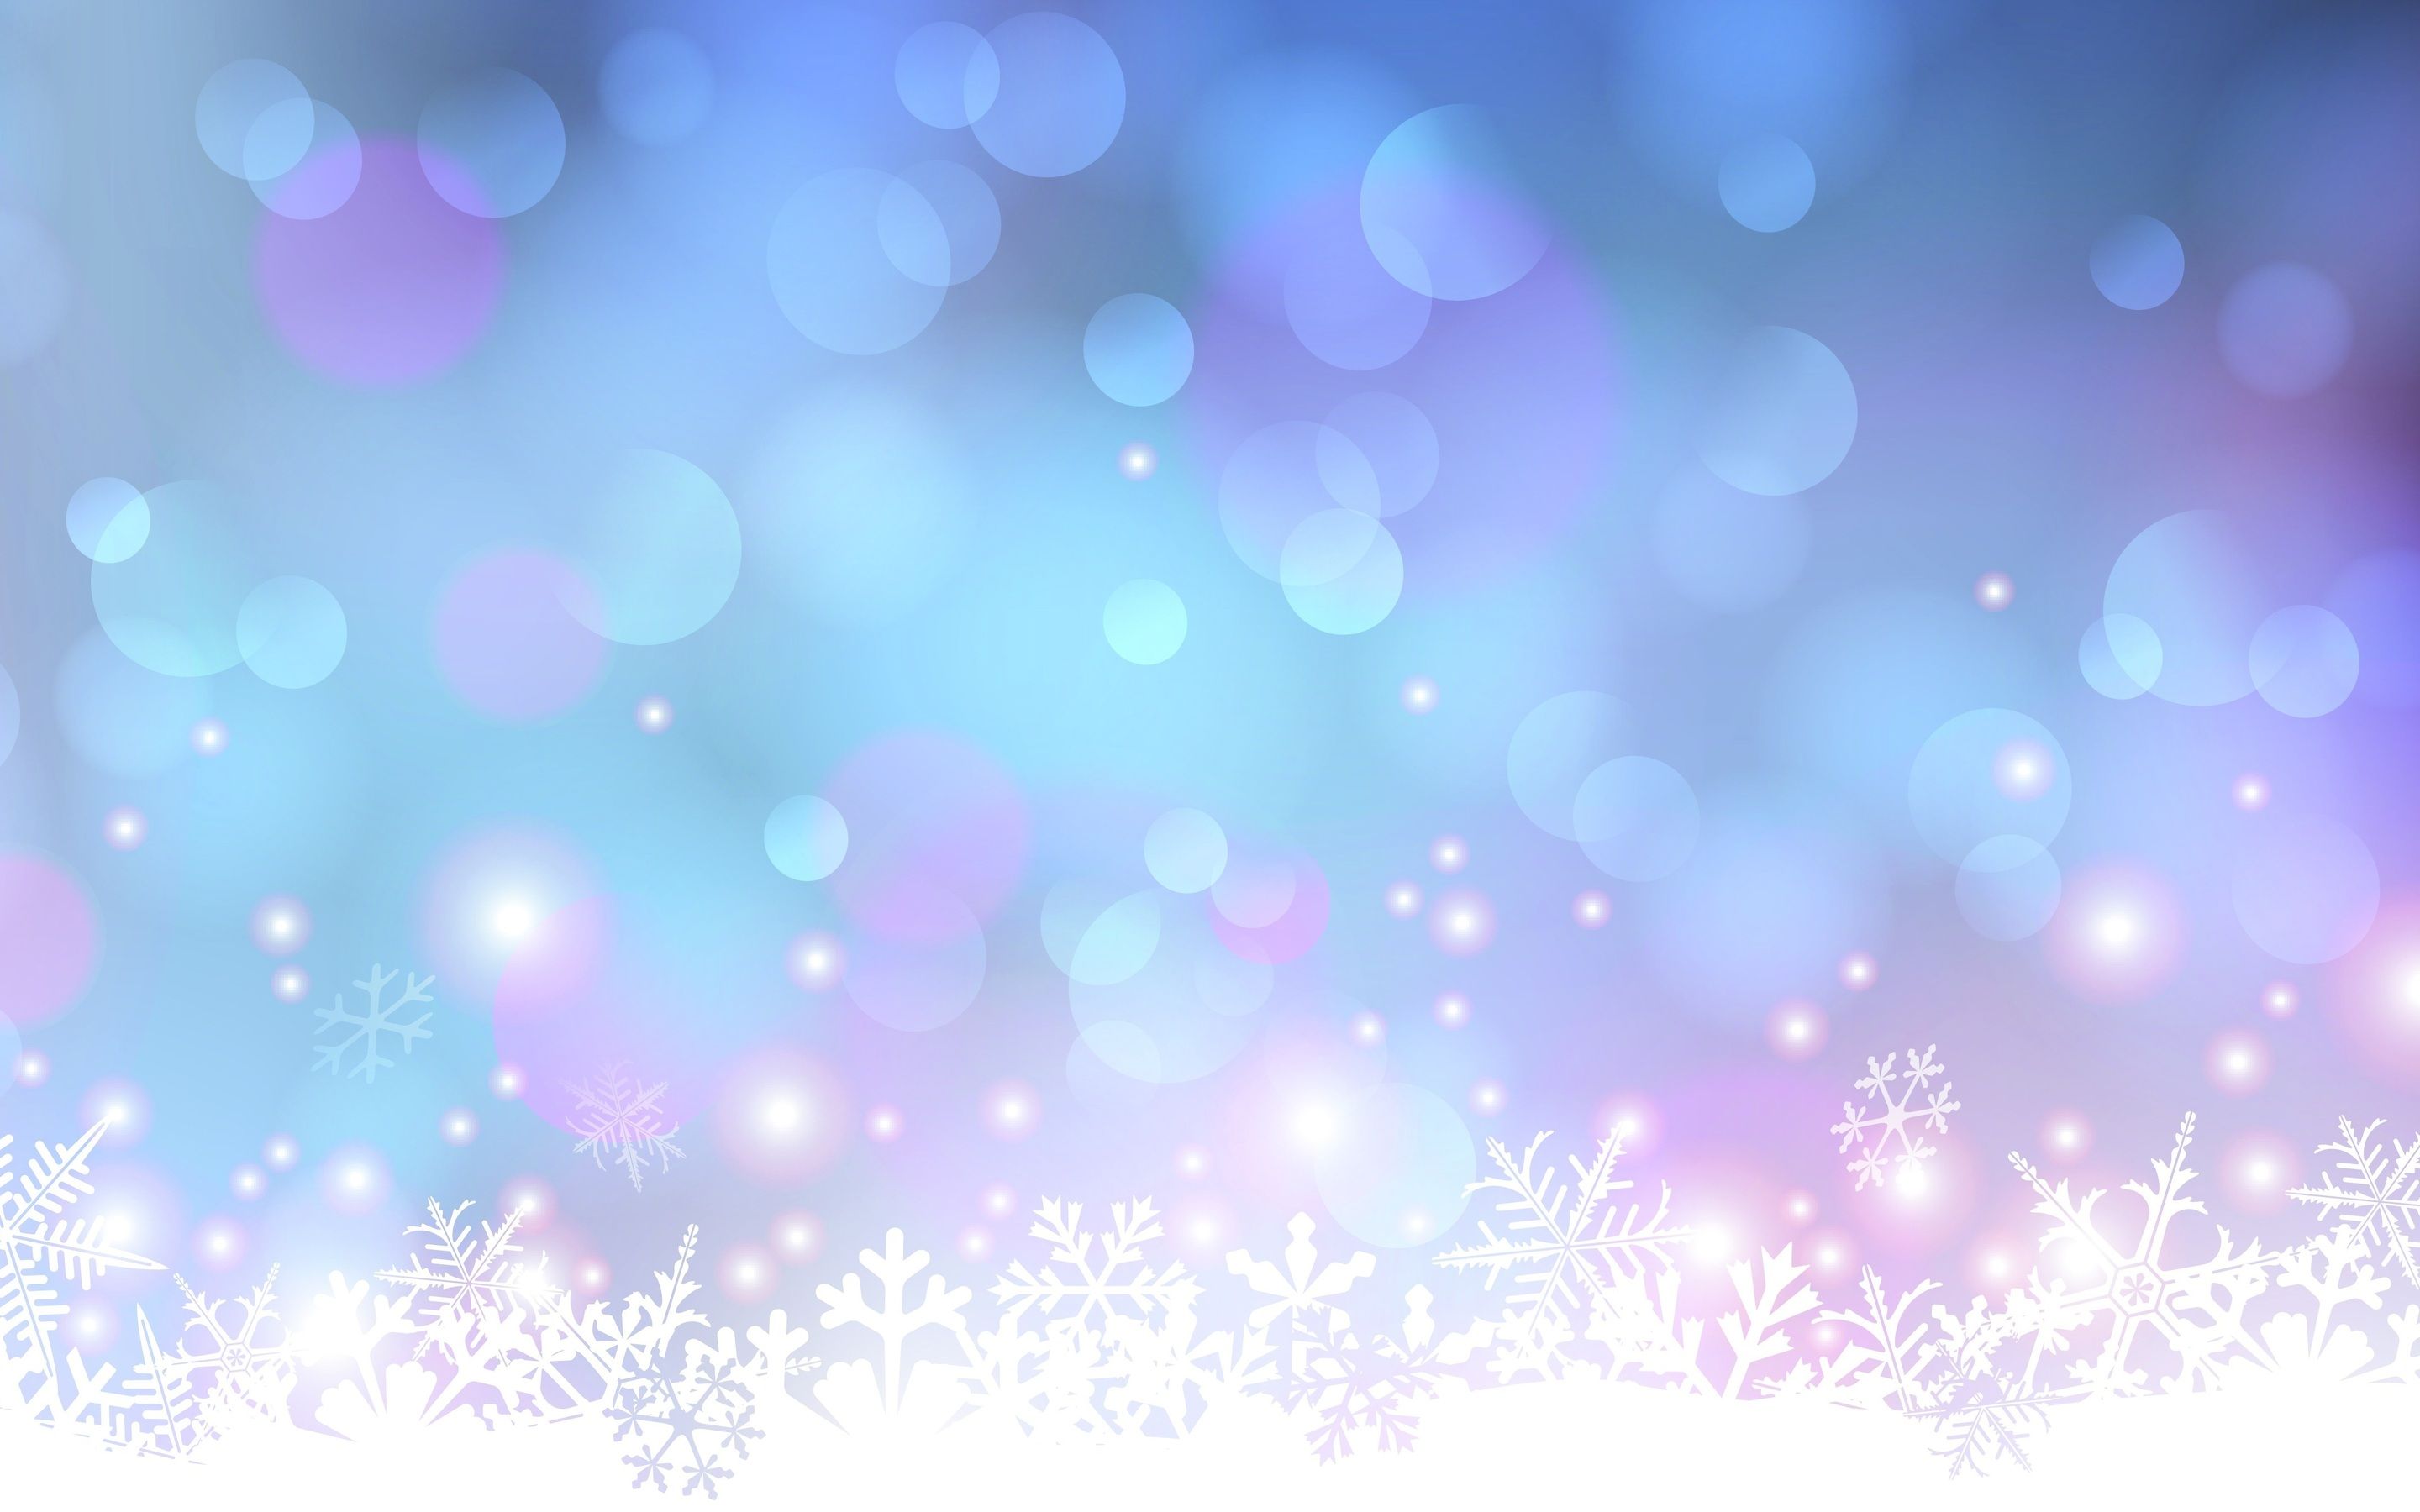 Christmas desktop background, image, photo, pics